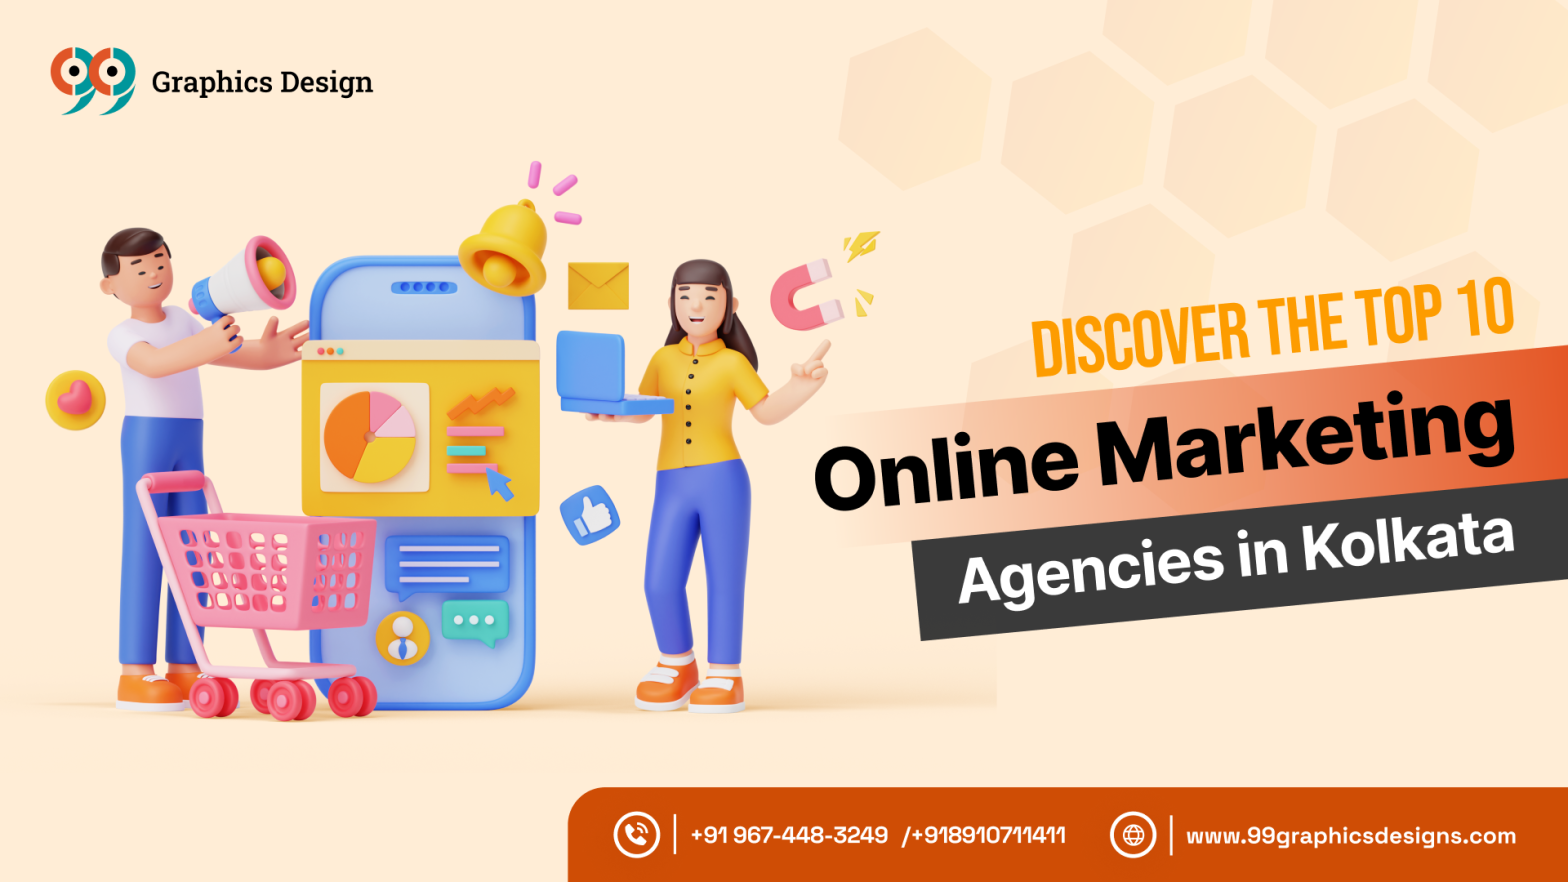 Online Marketing Agencies in Kolkata